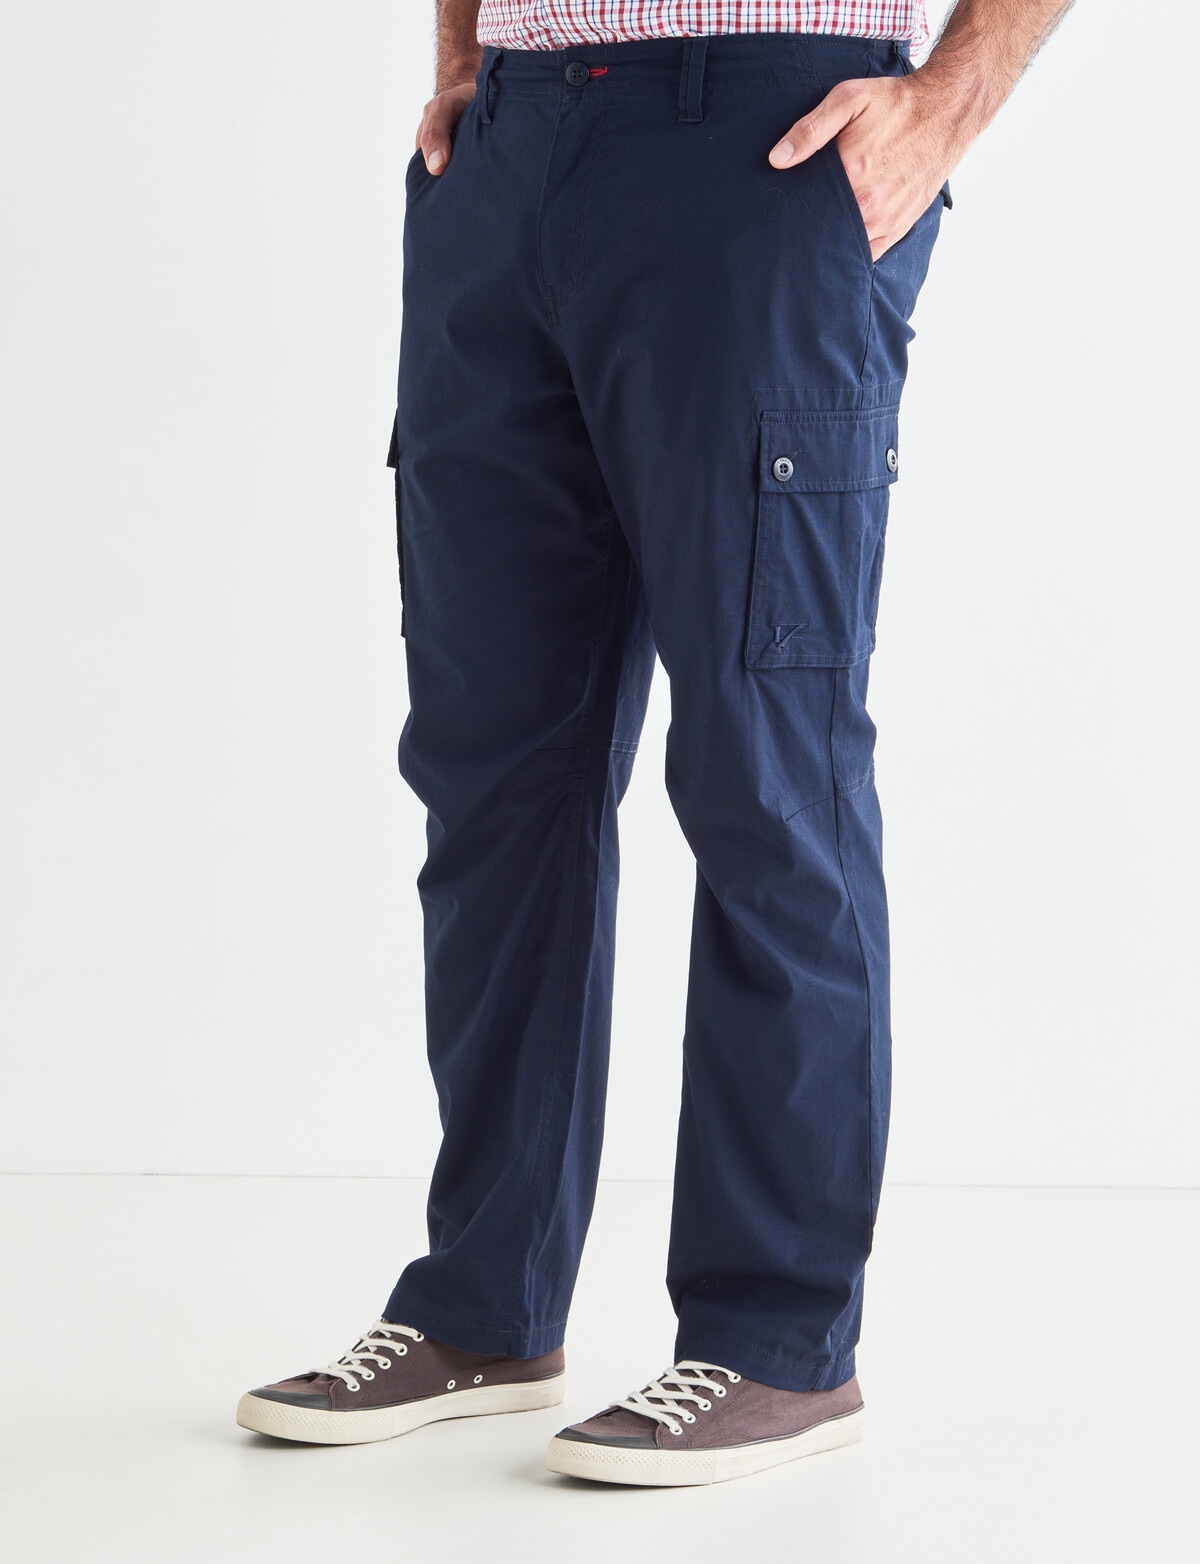 Zumba Fitness Men's Fusion Cargo Pants, Blue, Small 